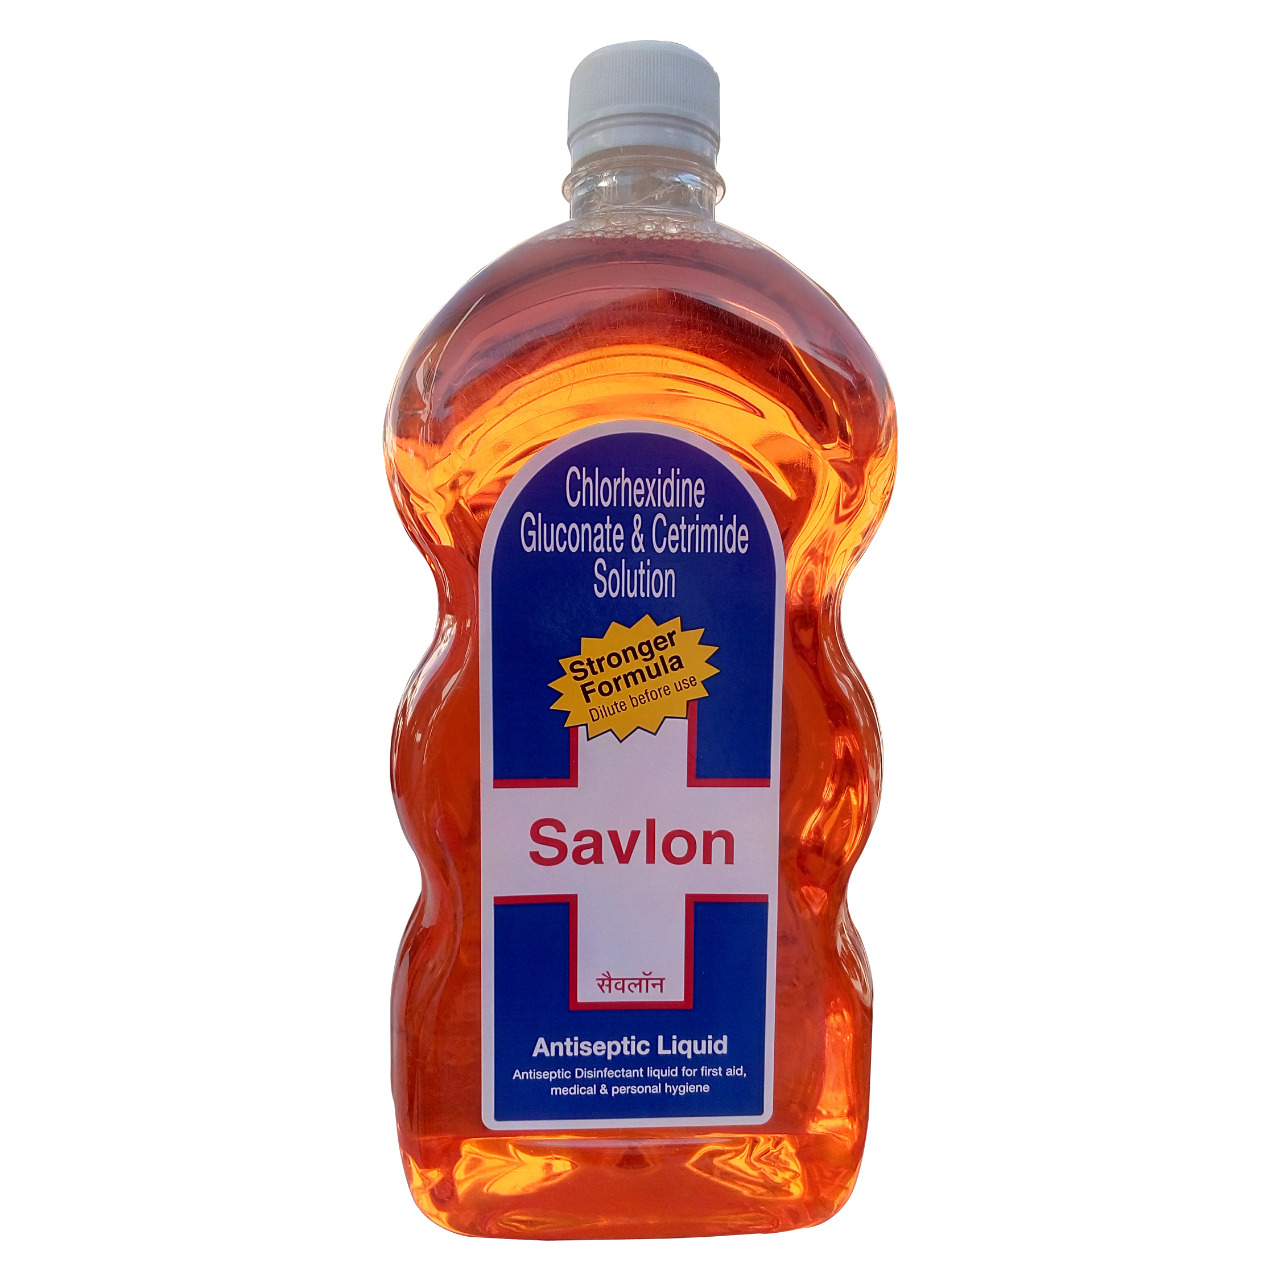 Savlon Antiseptic Liquid ‐ 1 Ltr